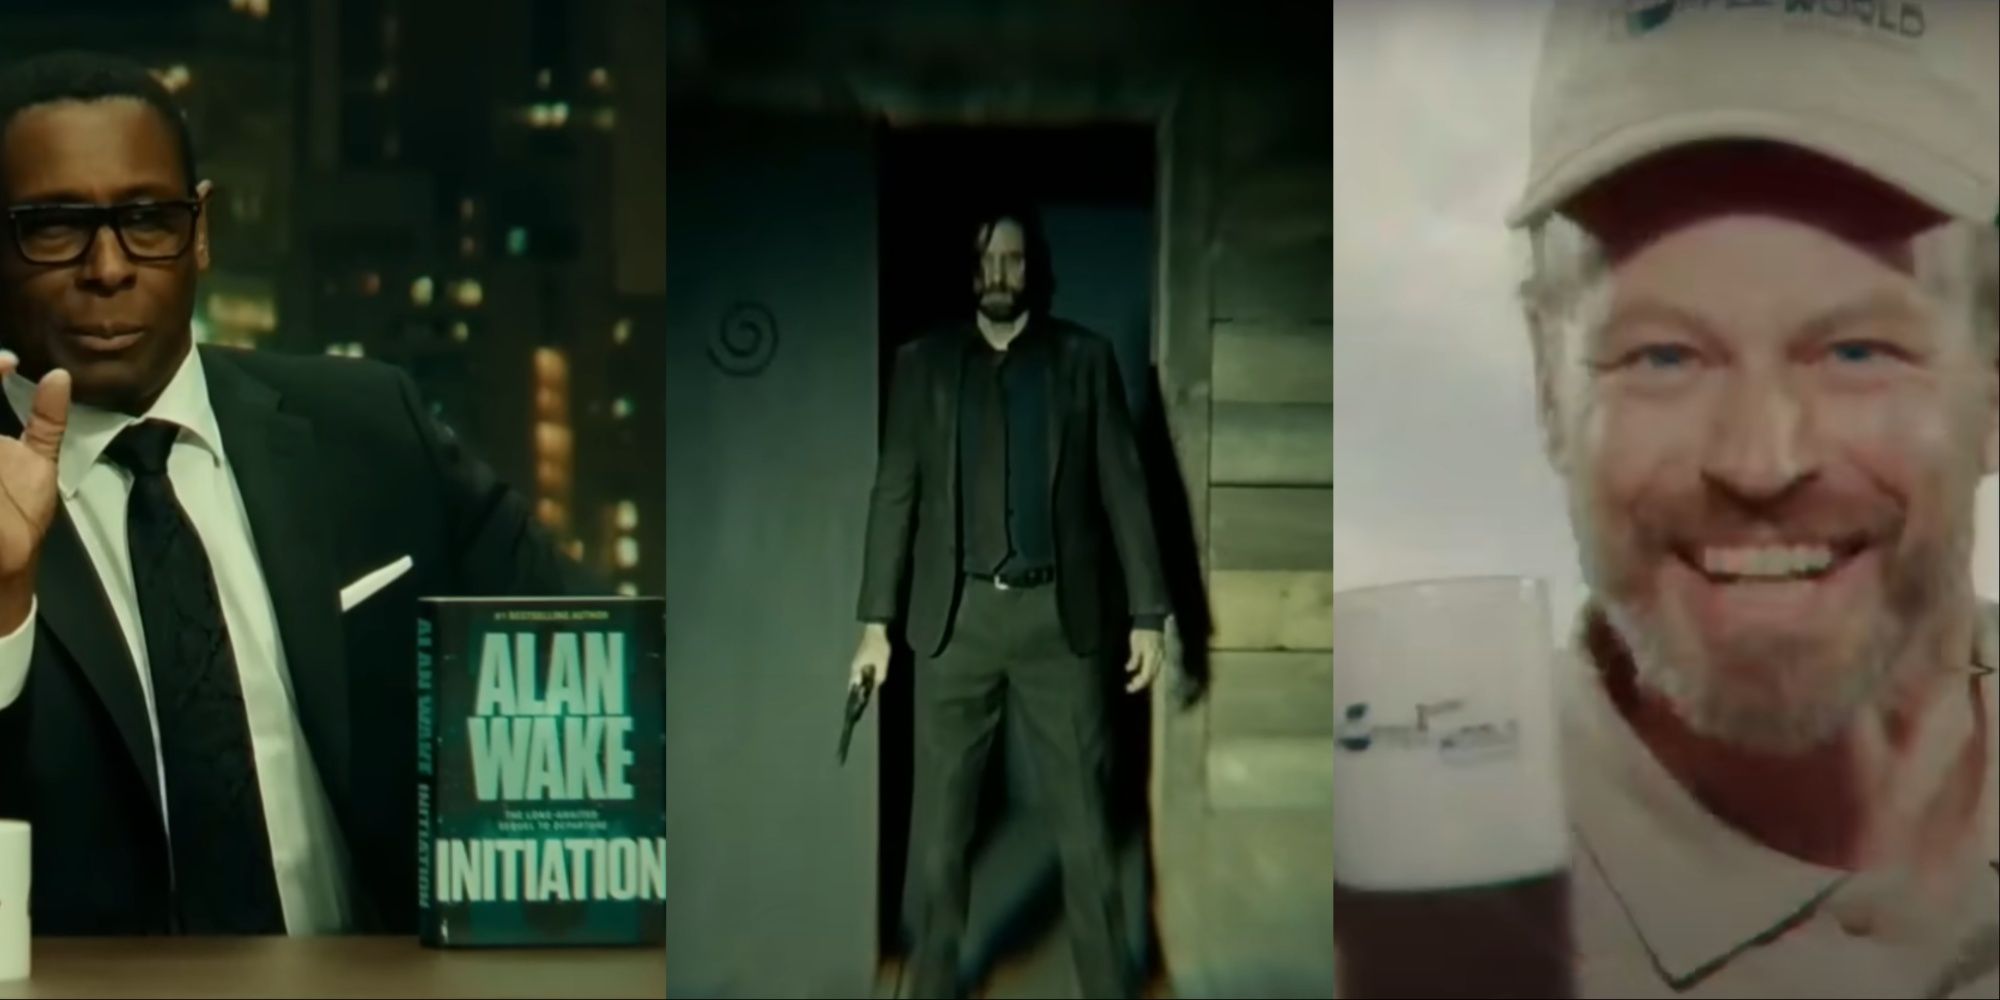 Watch the Alan Wake 2 Video Game Trailer Shown at 2023 Gamescom